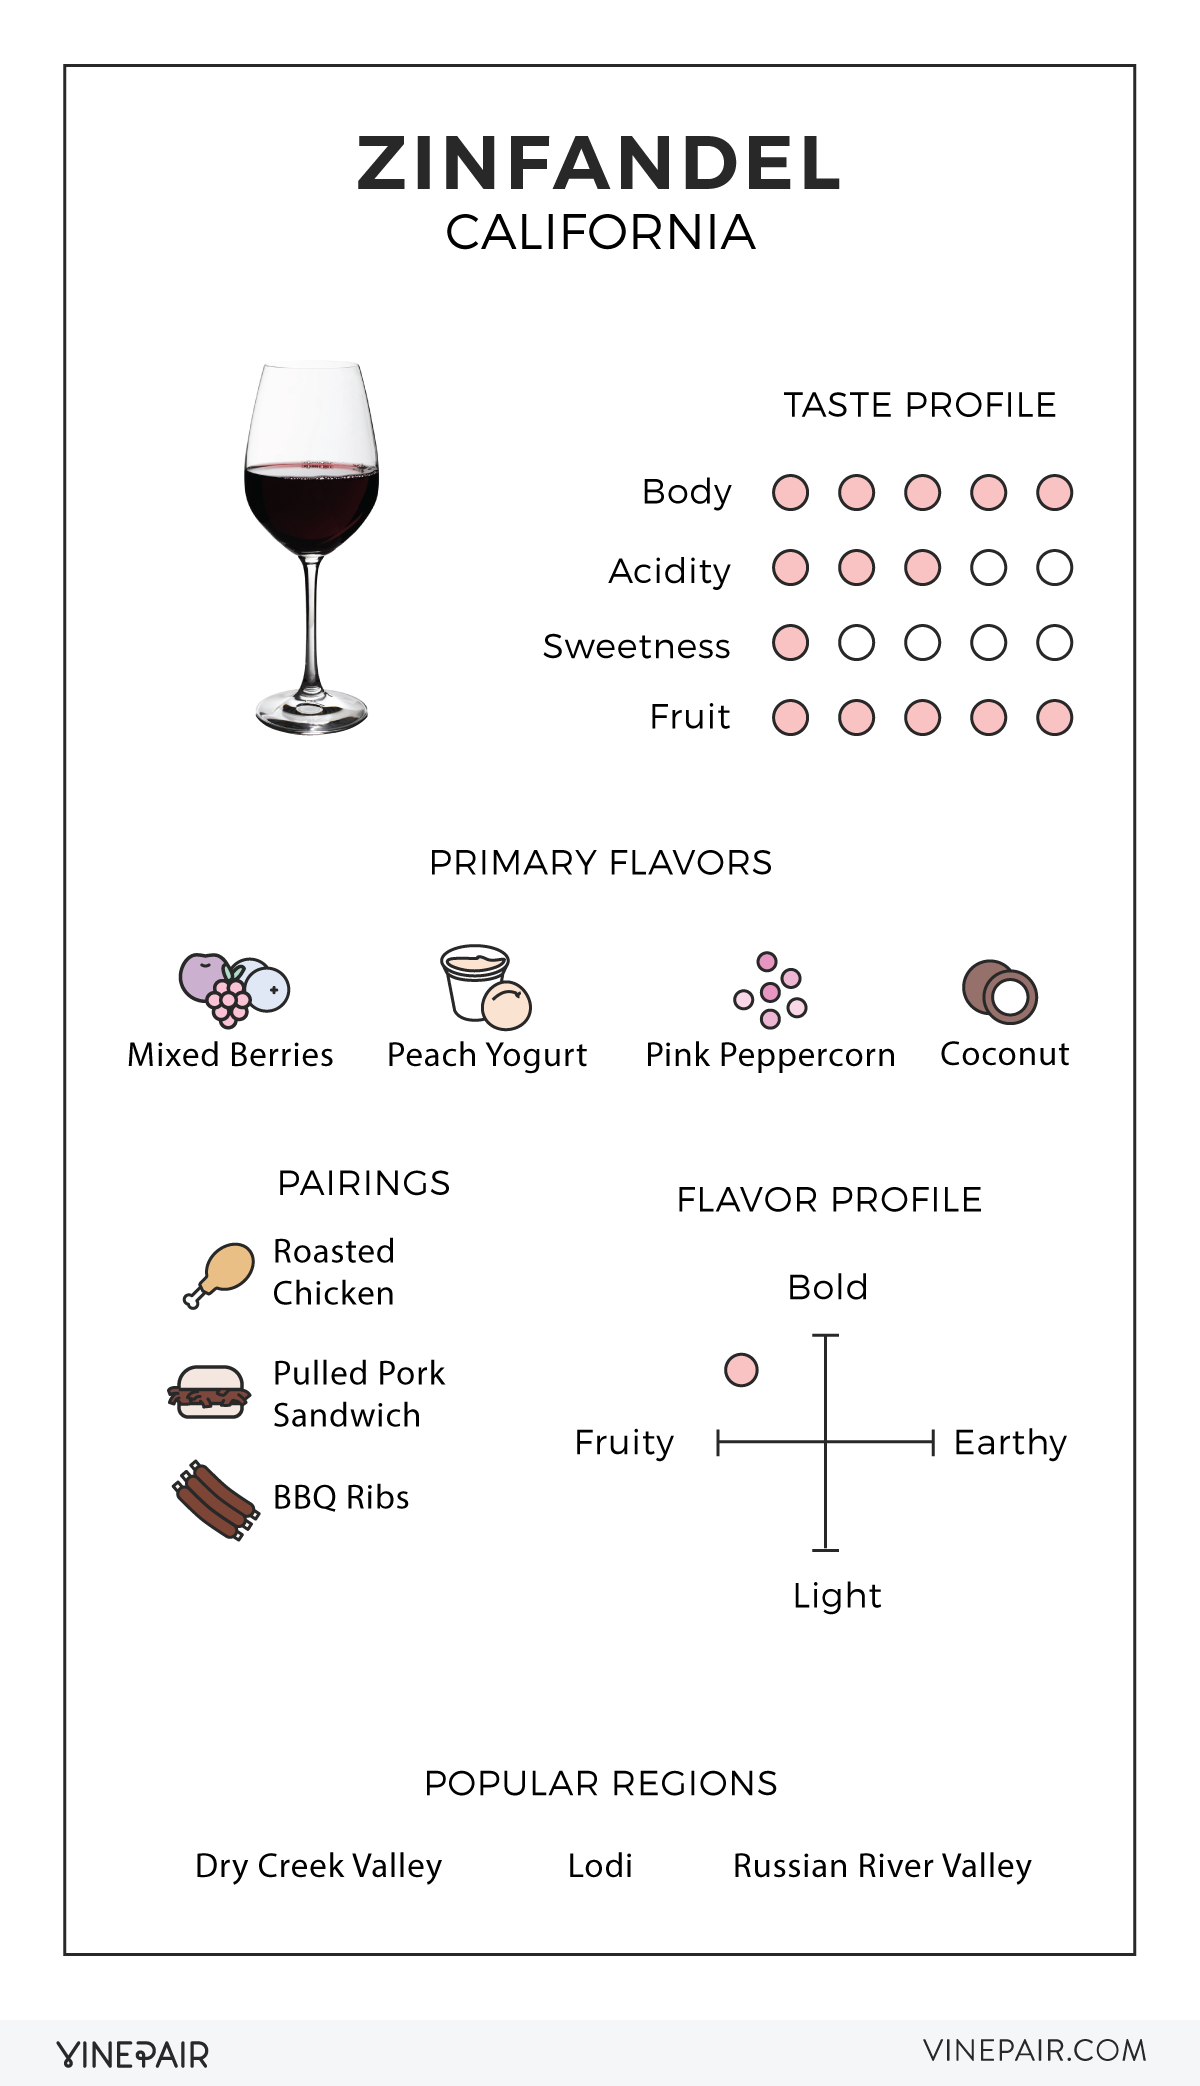 Guide to Zinfandel Wine